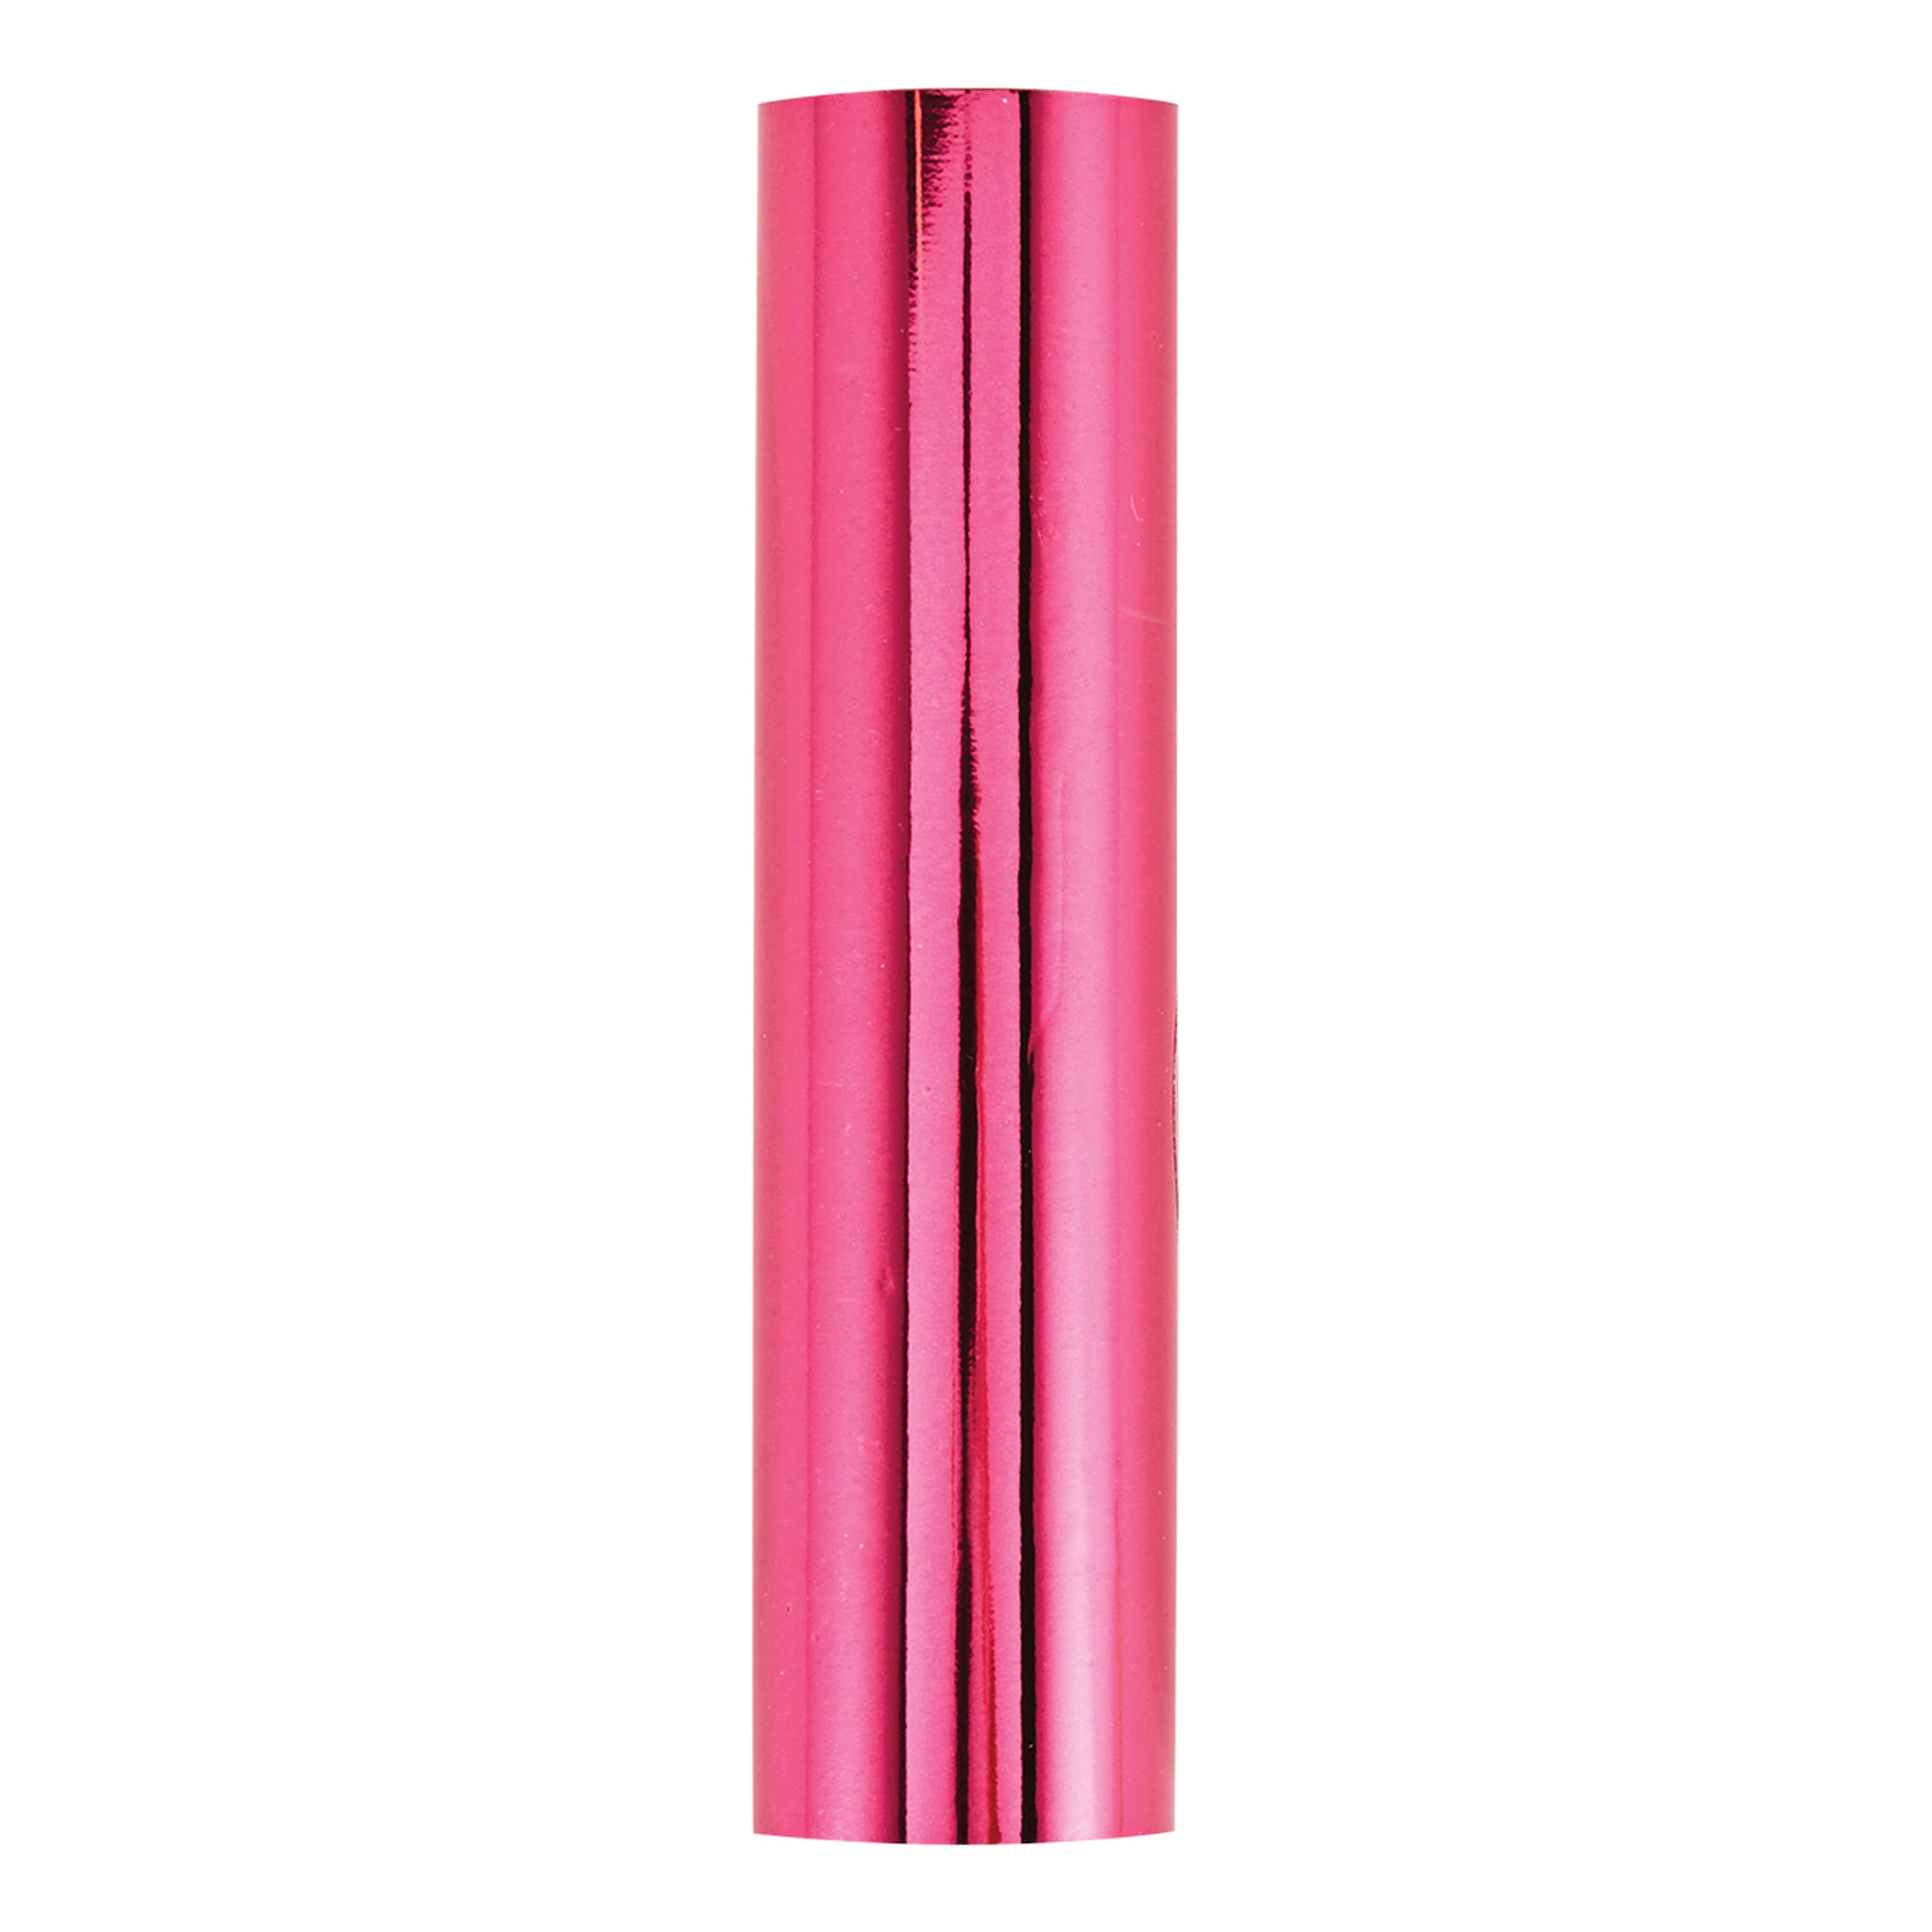 Spellbinders Glimmer Hot Foil Roll - Bright Pink - Folie